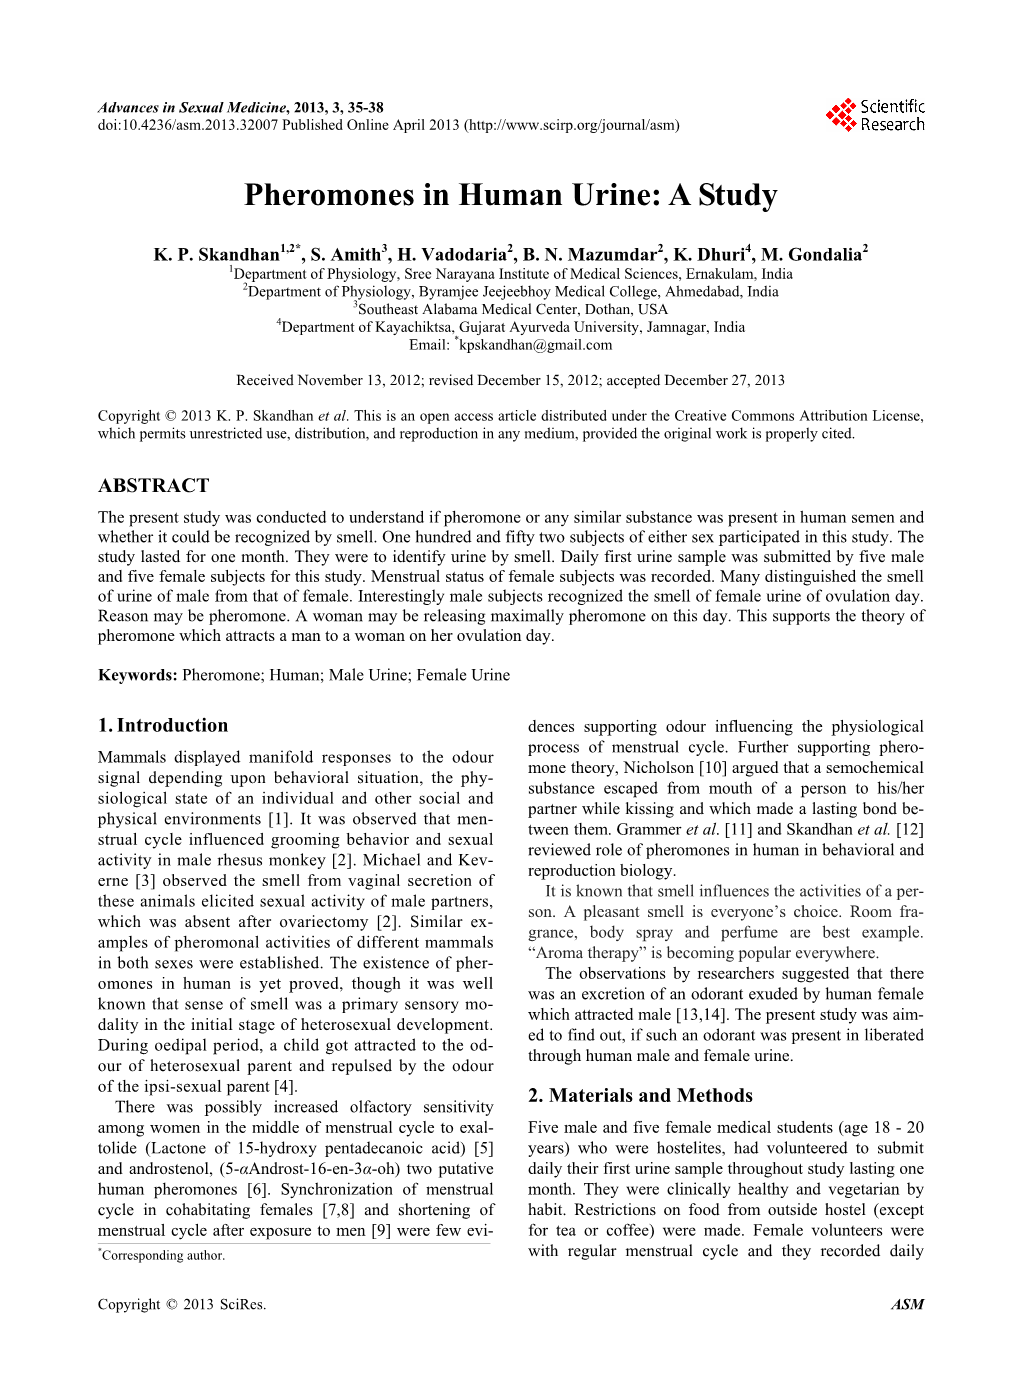 Pheromones in Human Urine: a Study